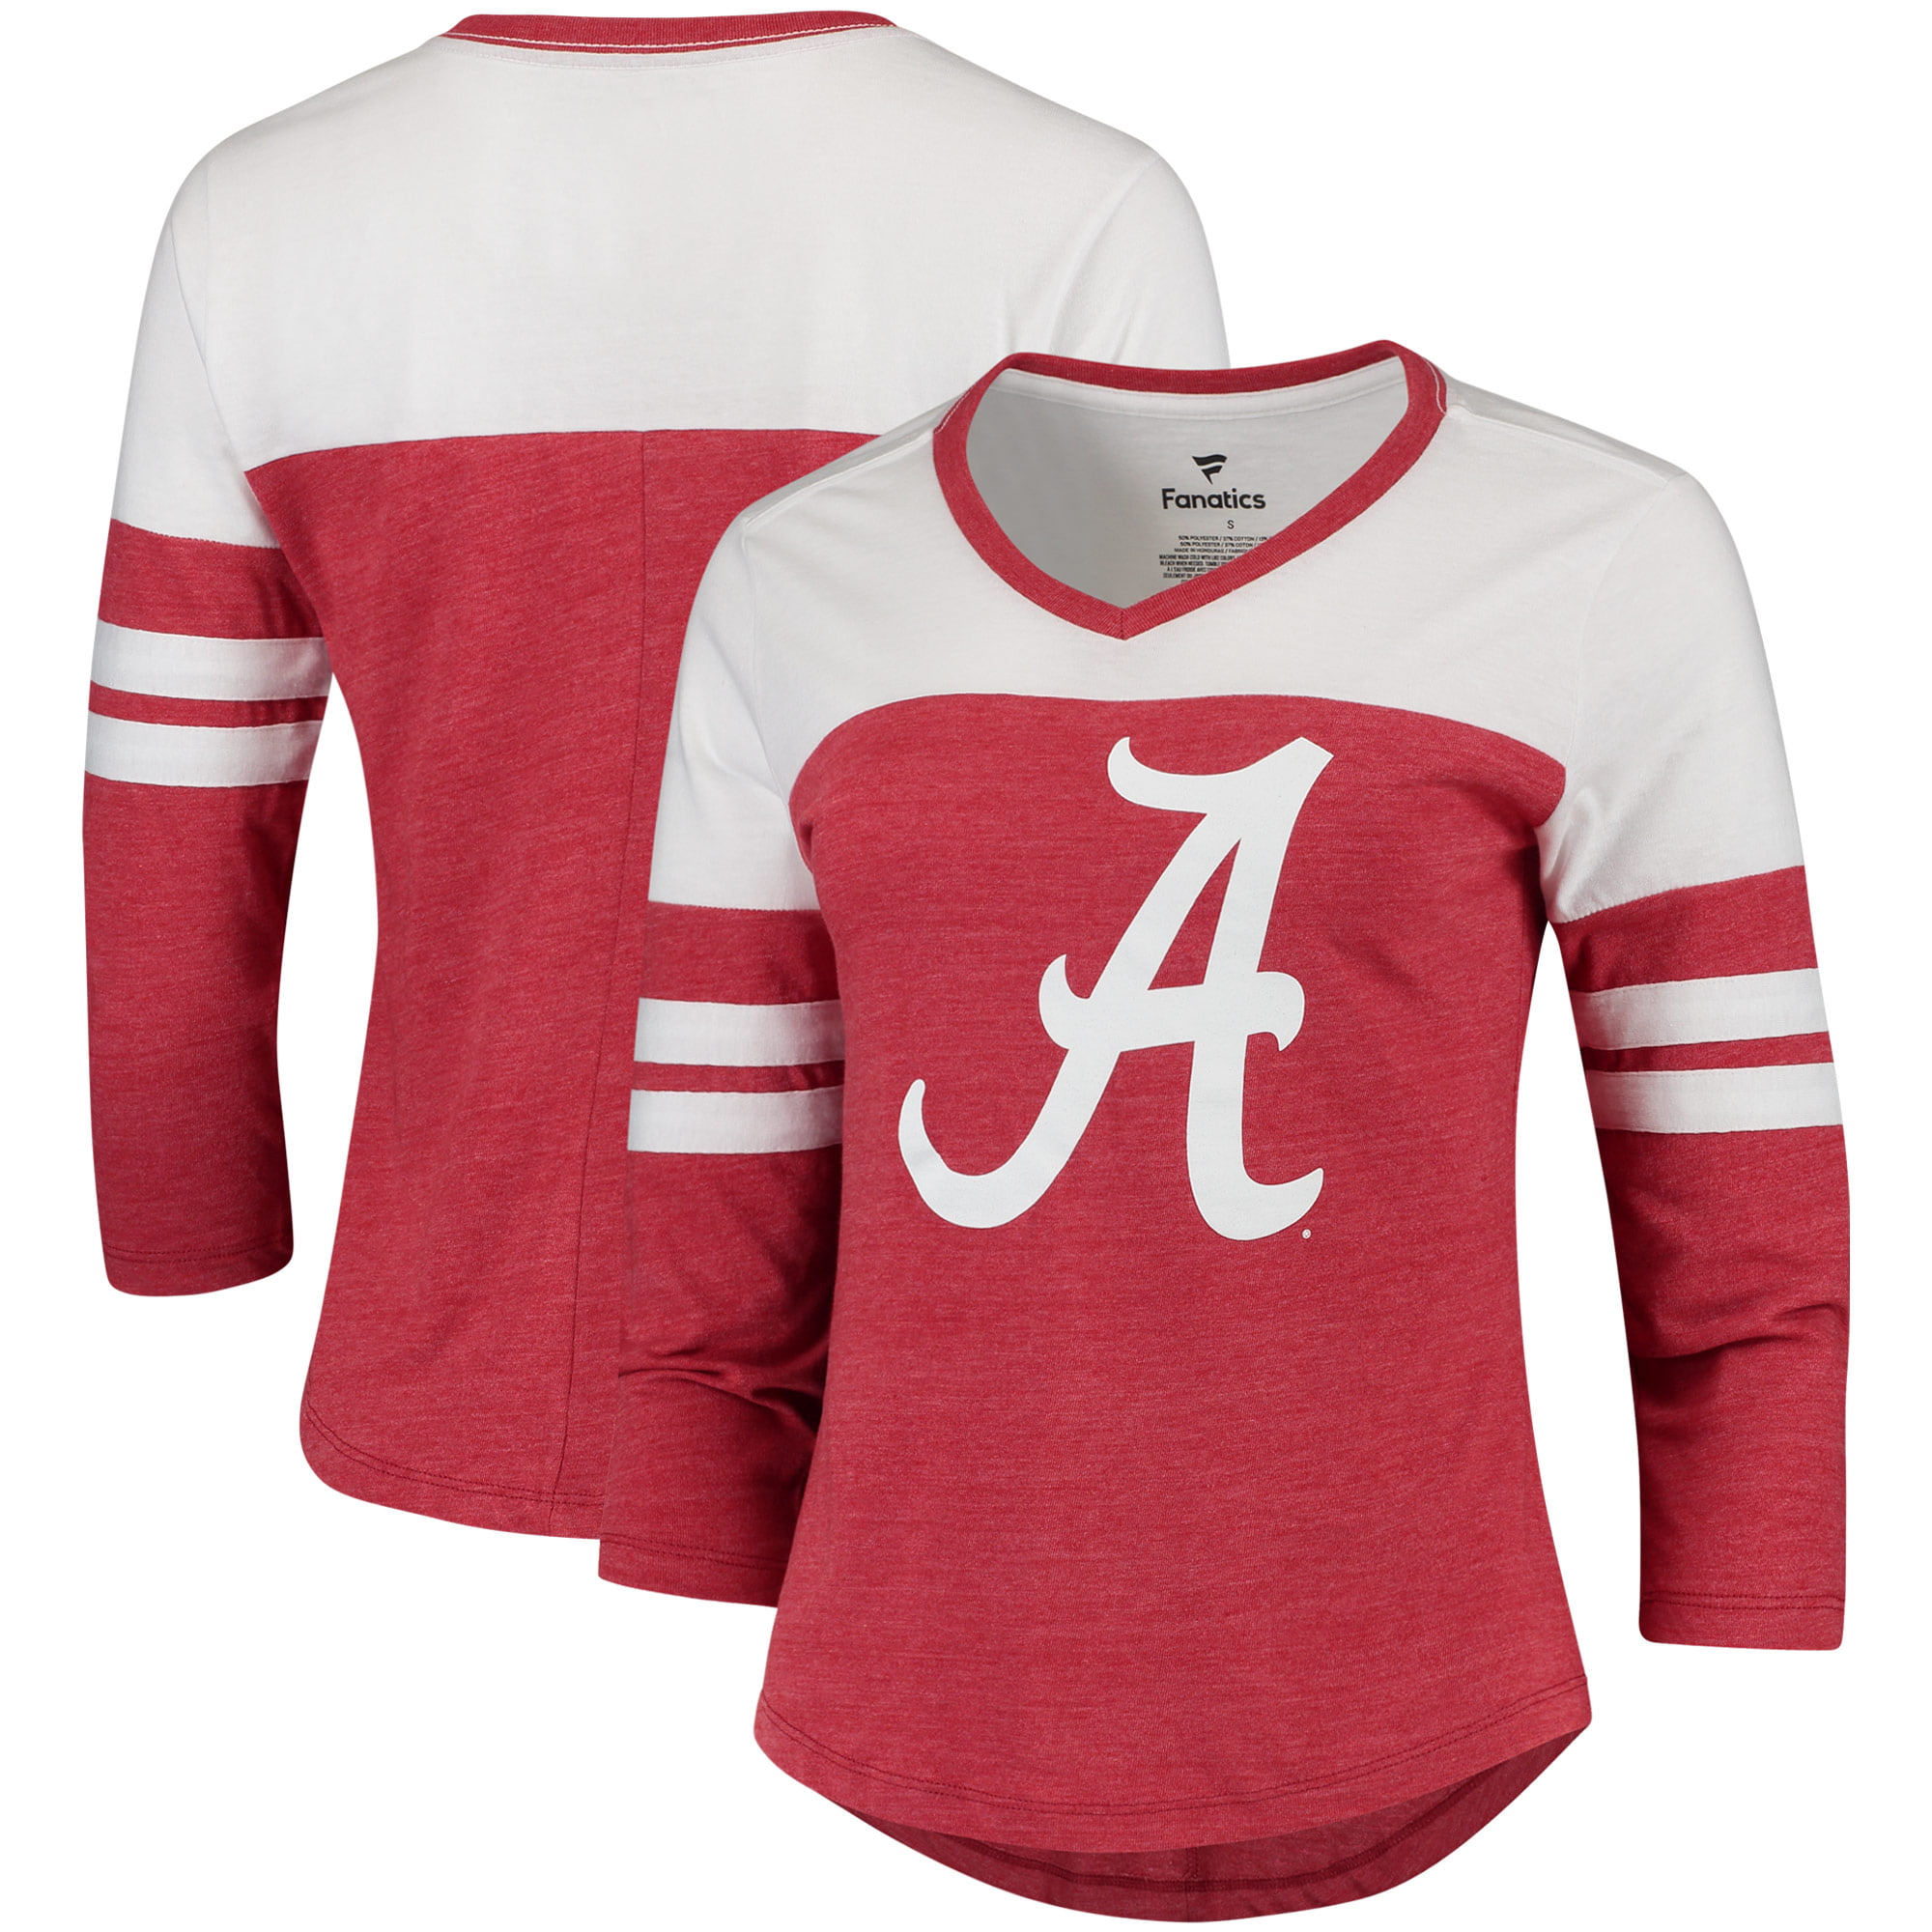 Alabama Crimson Tide Fanatics Branded Women's Primary Logo 3/4-Sleeve ...